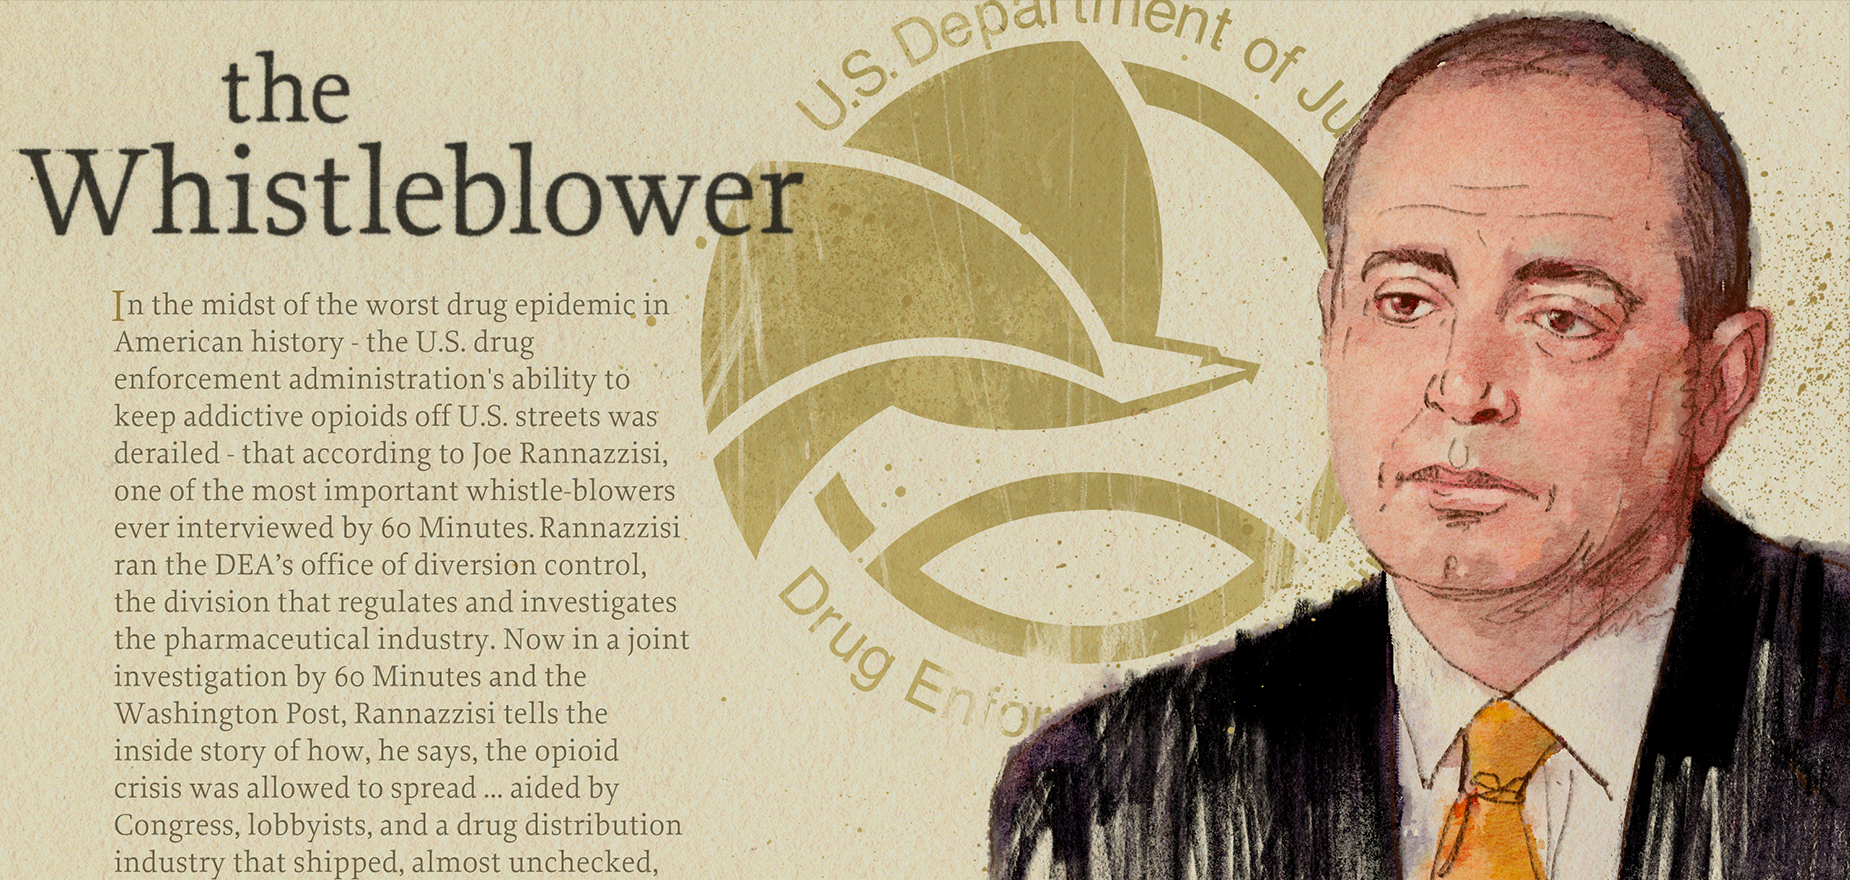 The Whistleblower - CBS News 60 Minutes / The Washington Post